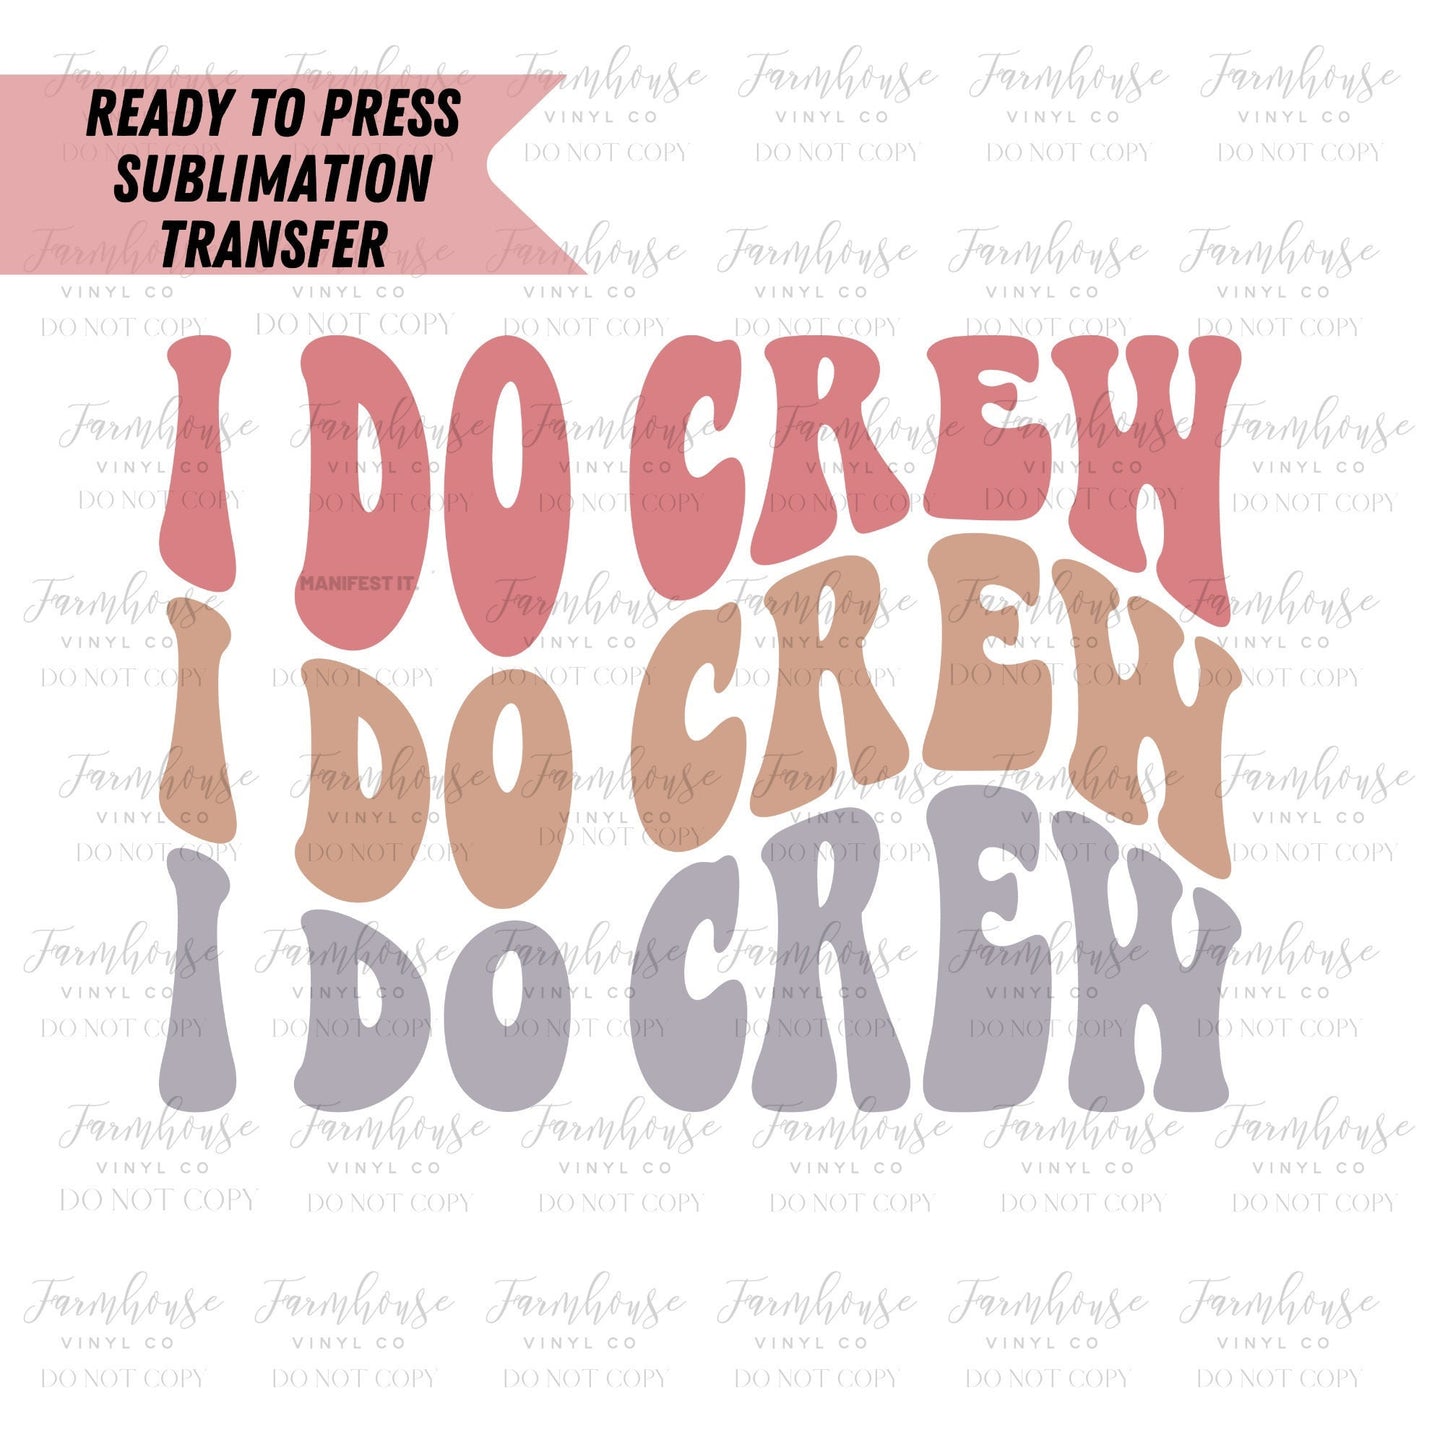 Retro I Do Crew Bachelorette Ready To Press Sublimation Transfer - Farmhouse Vinyl Co